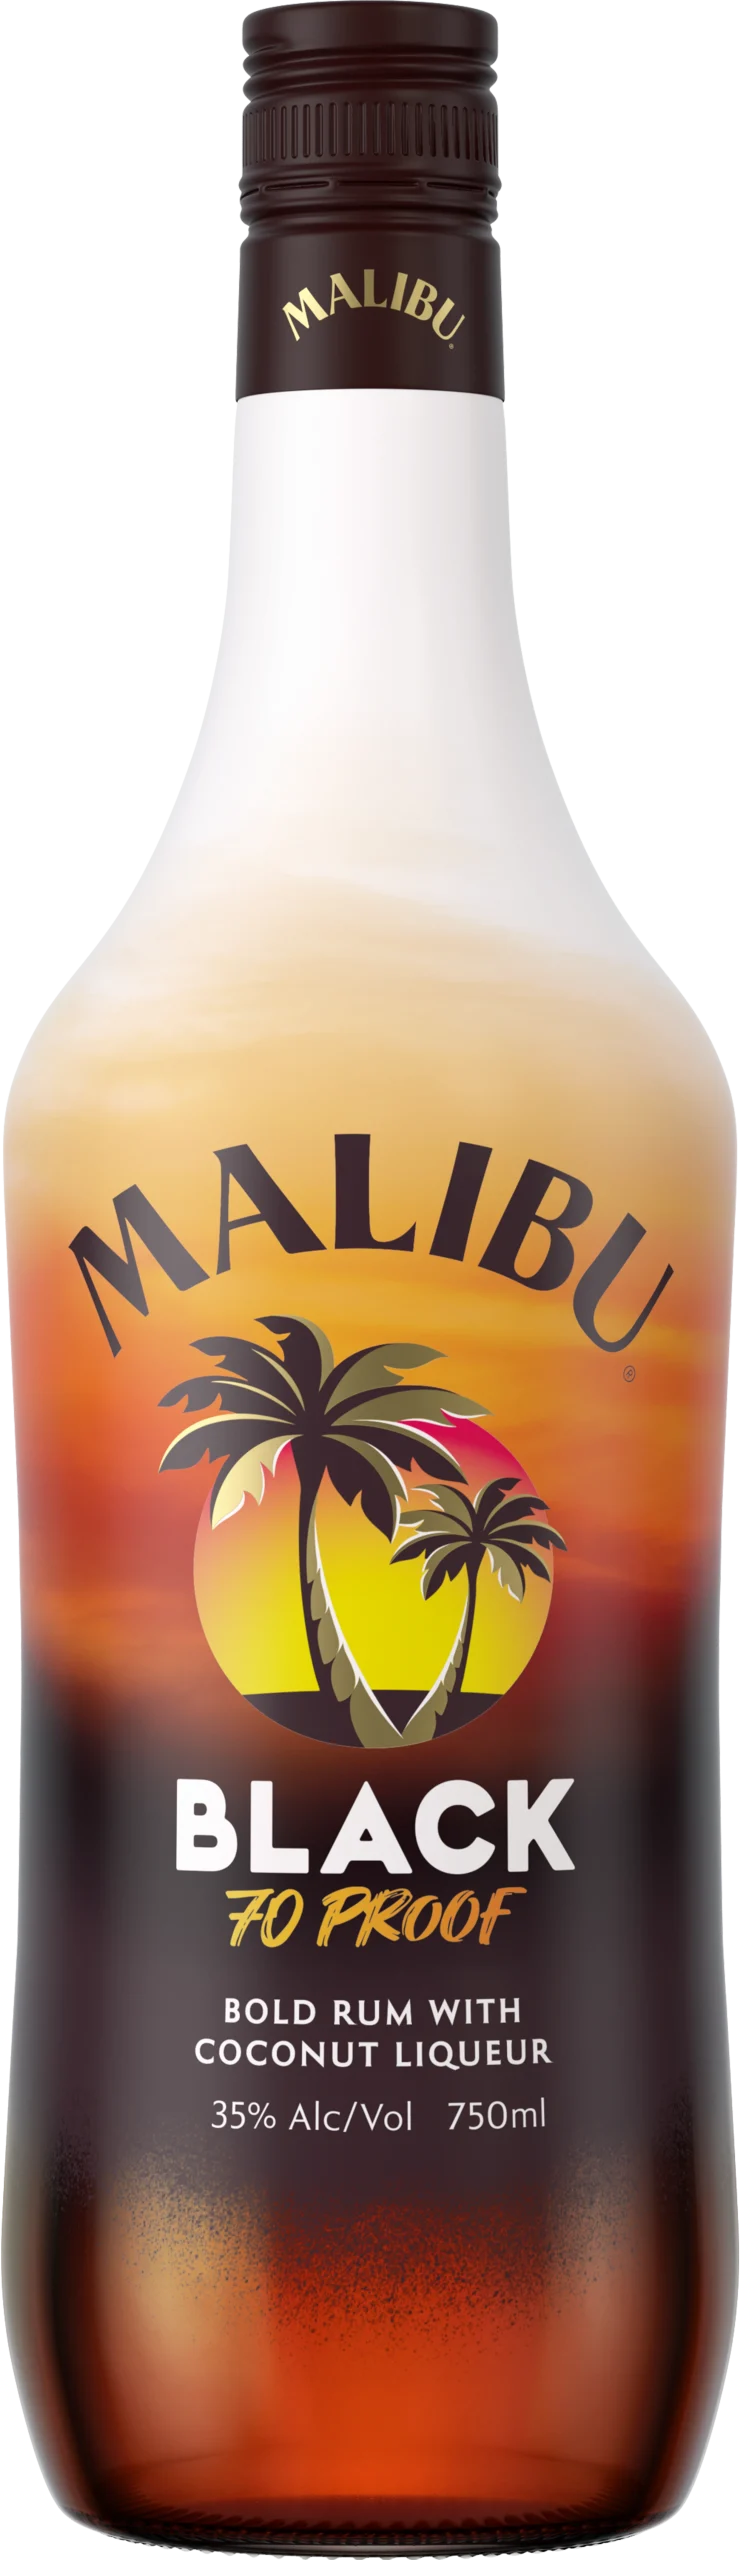 Malibu black botte